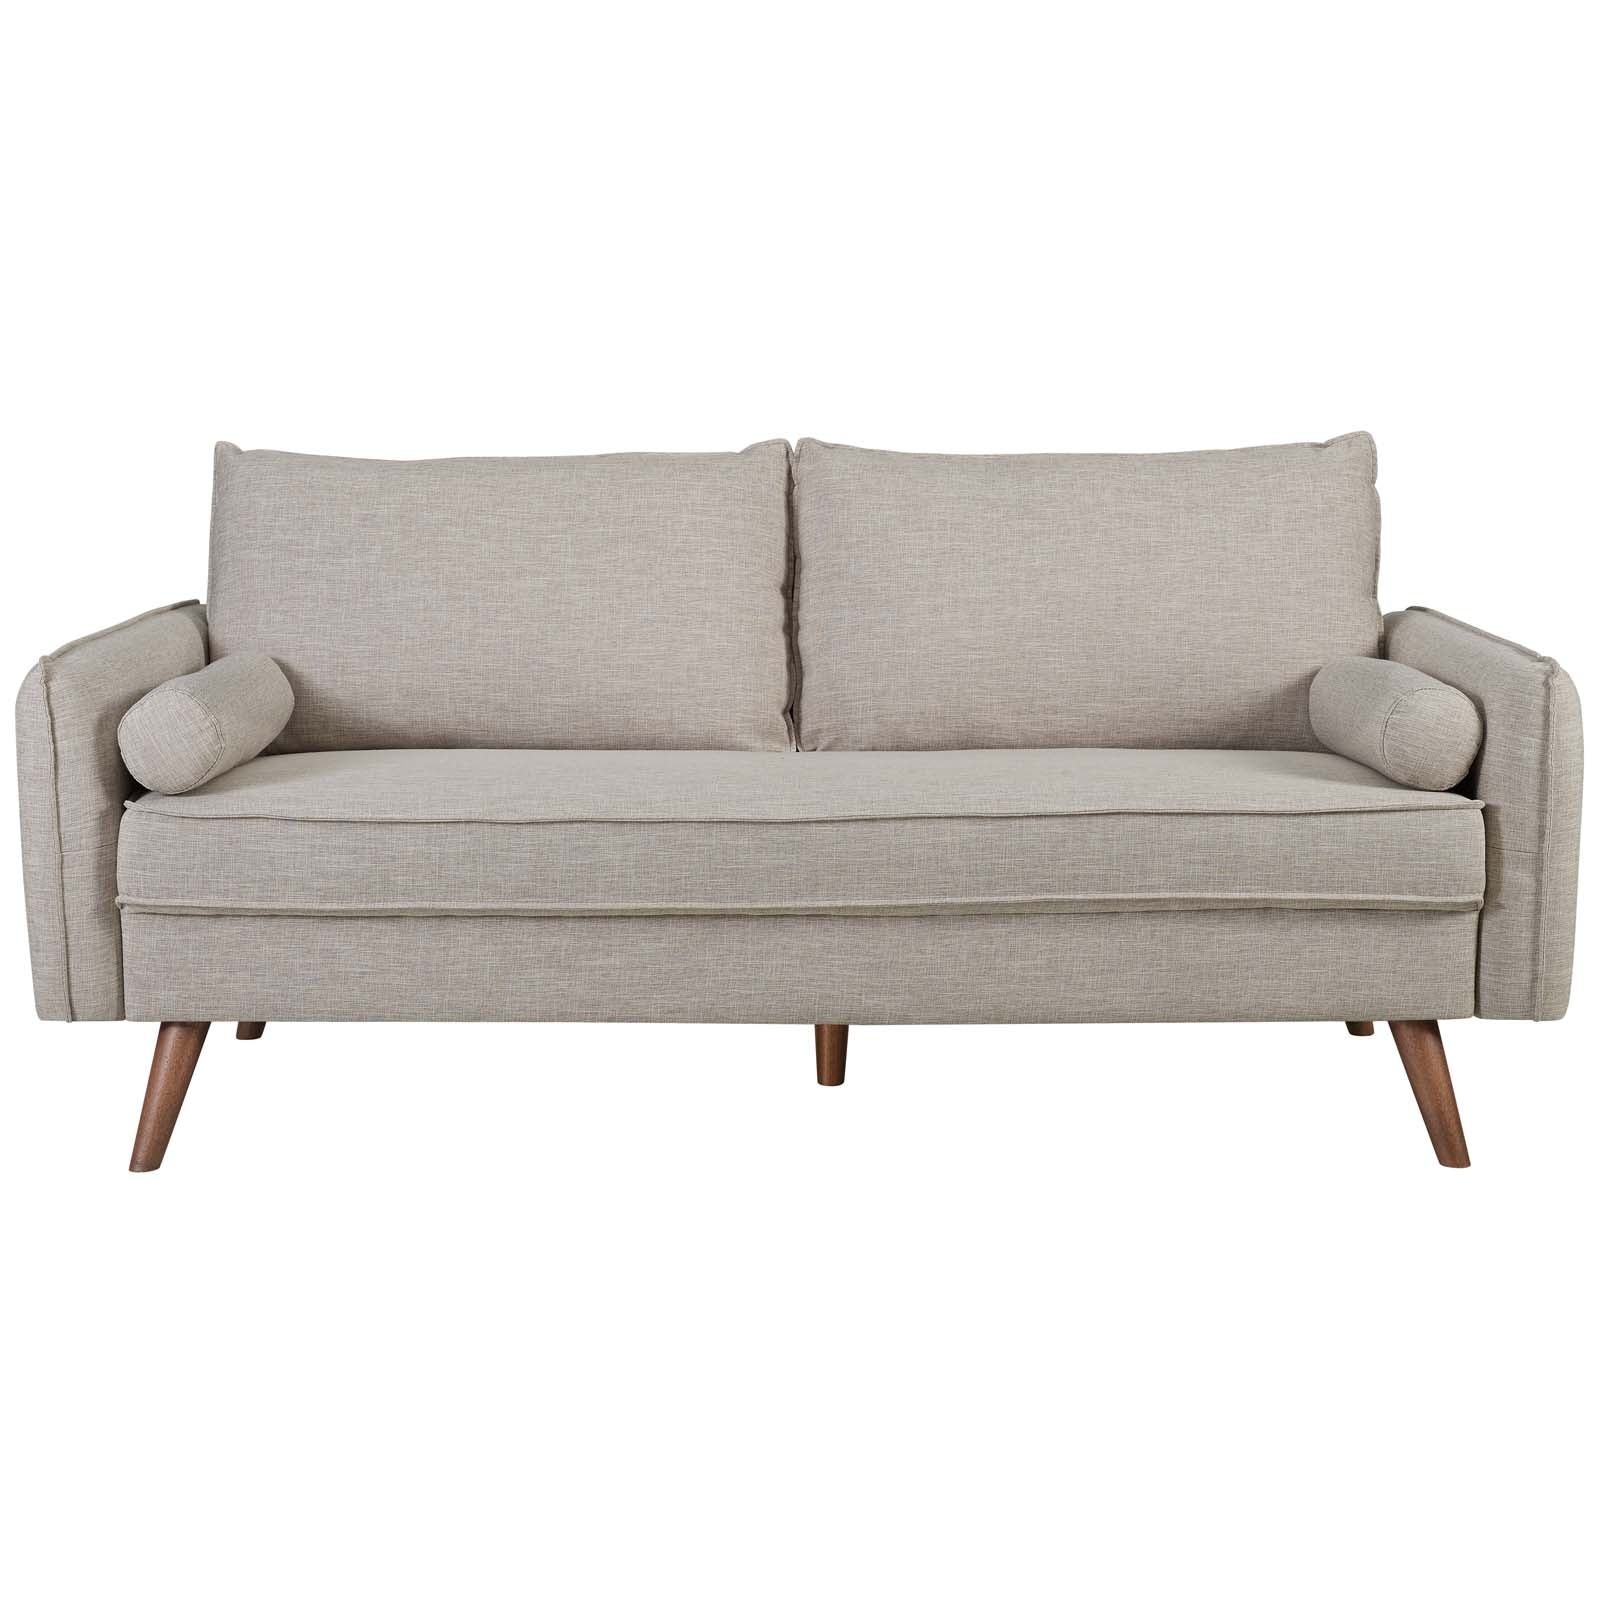 Revive Upholstered Fabric Sofa - East Shore Modern Home Furnishings